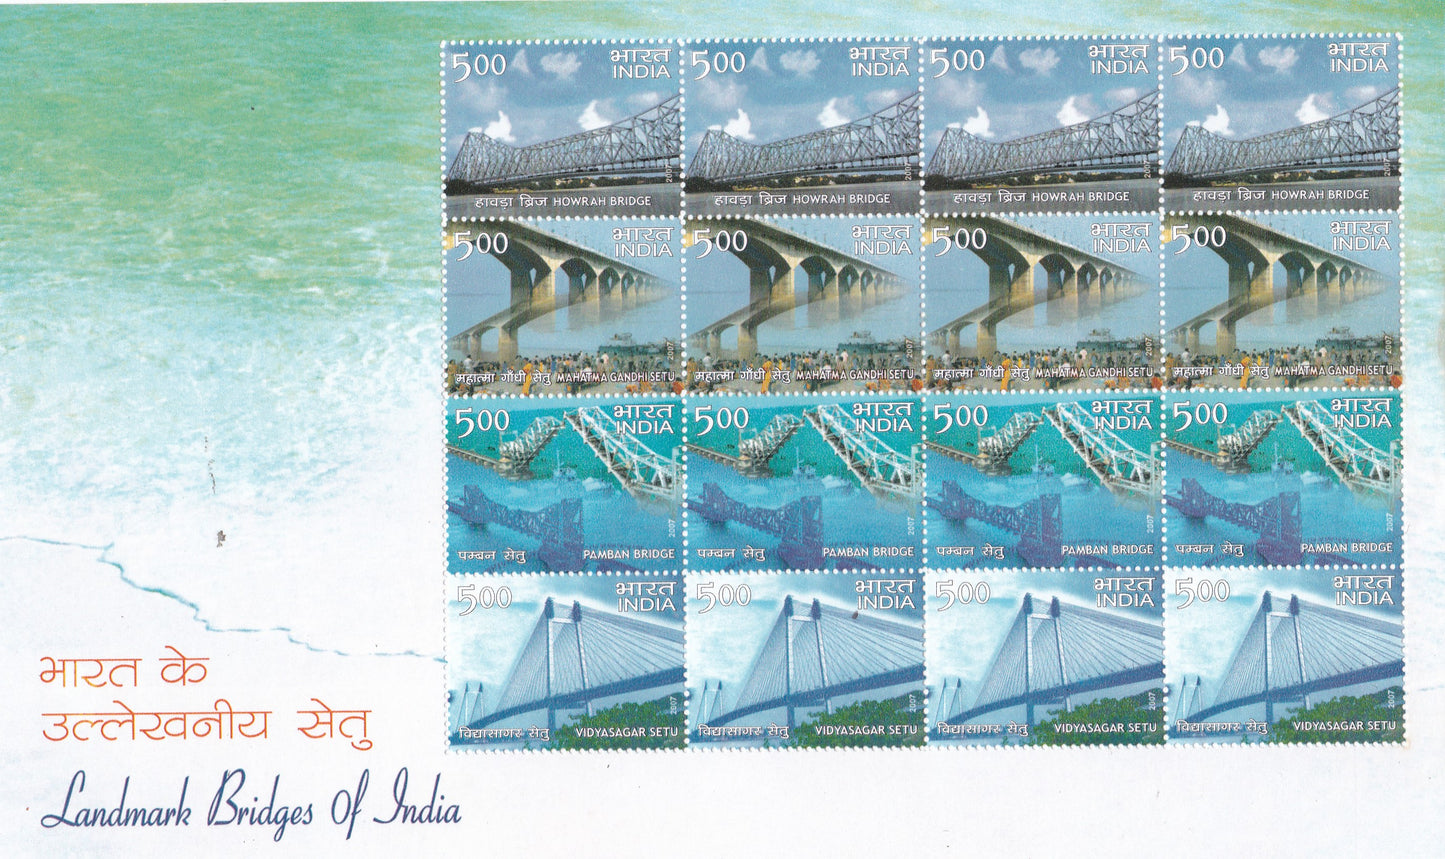 India-Sheetlets  Landmark Bridges of India-4 vertical rows different bridges.